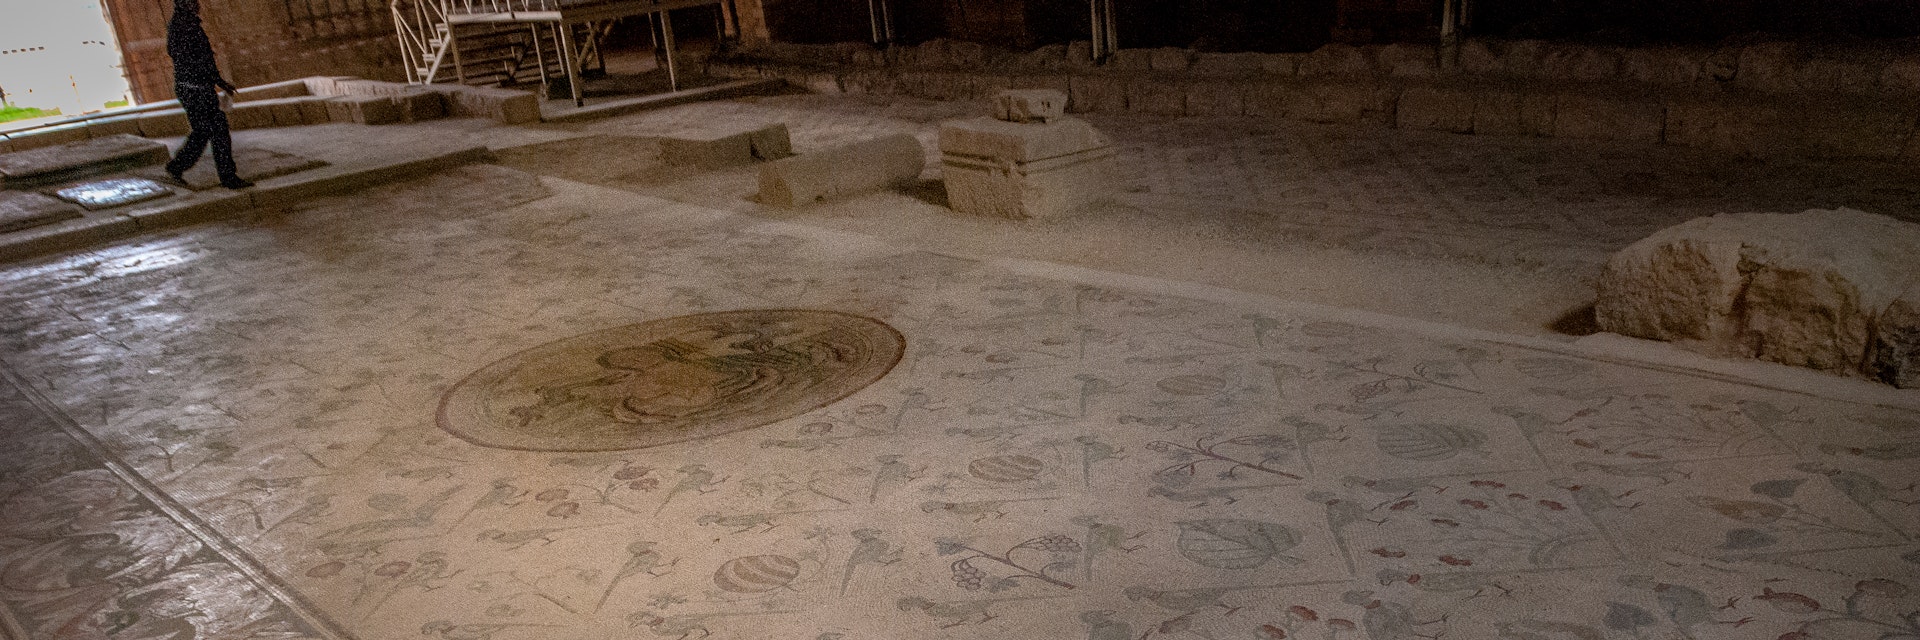 Mosaic in the Church of the Apostles in Madaba, Jordan.